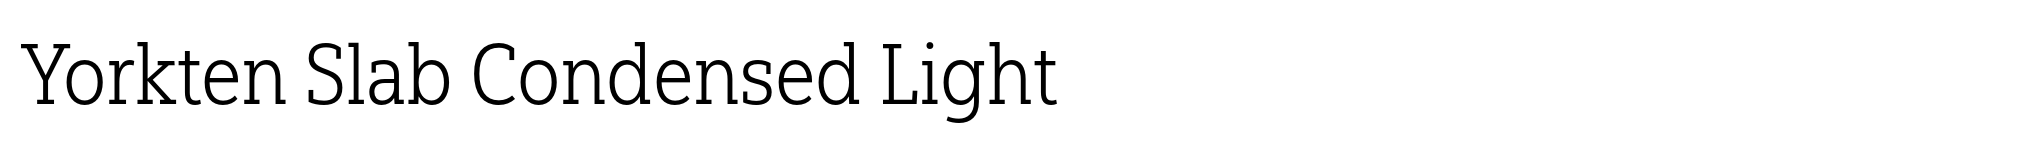 Yorkten Slab Condensed Light image